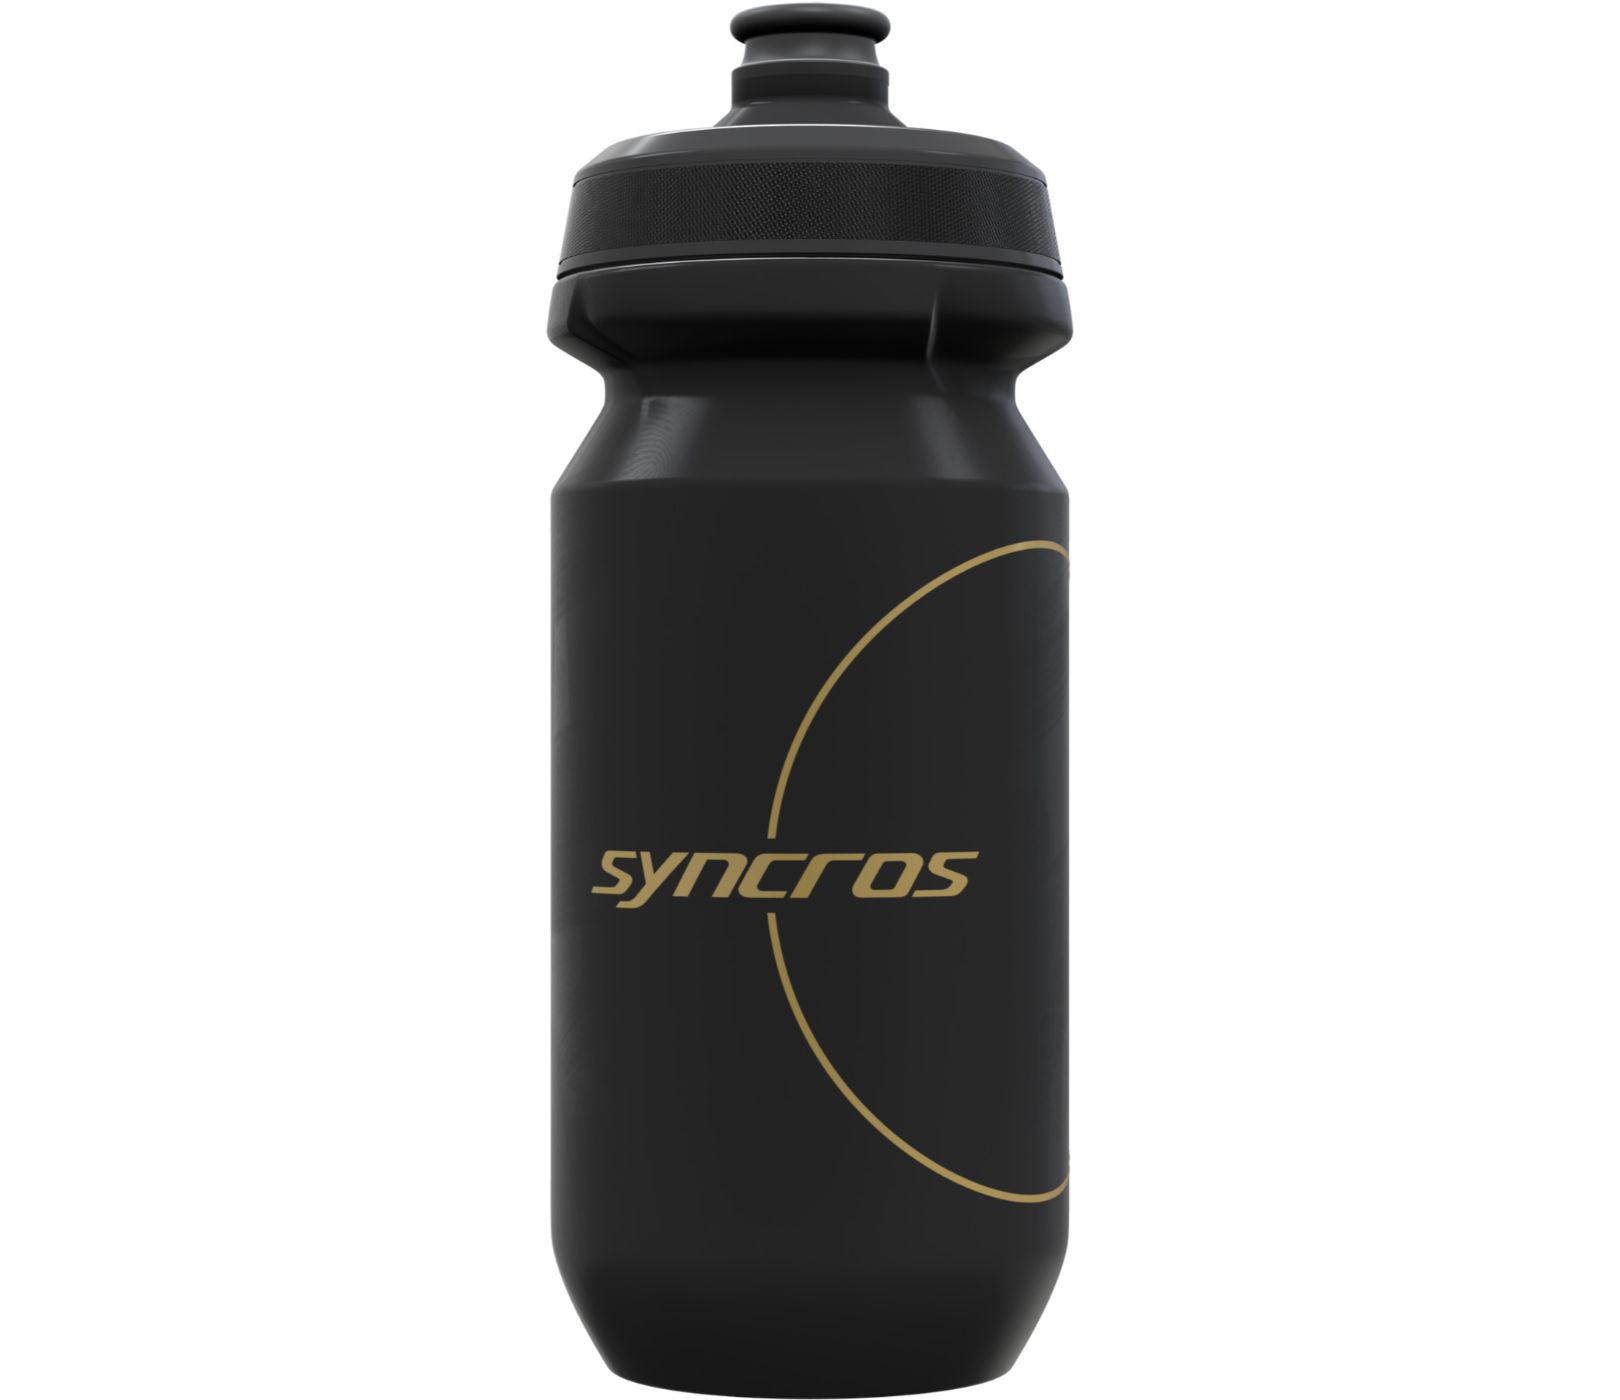 Syncros G5 Moon 800ml Water Bottle 